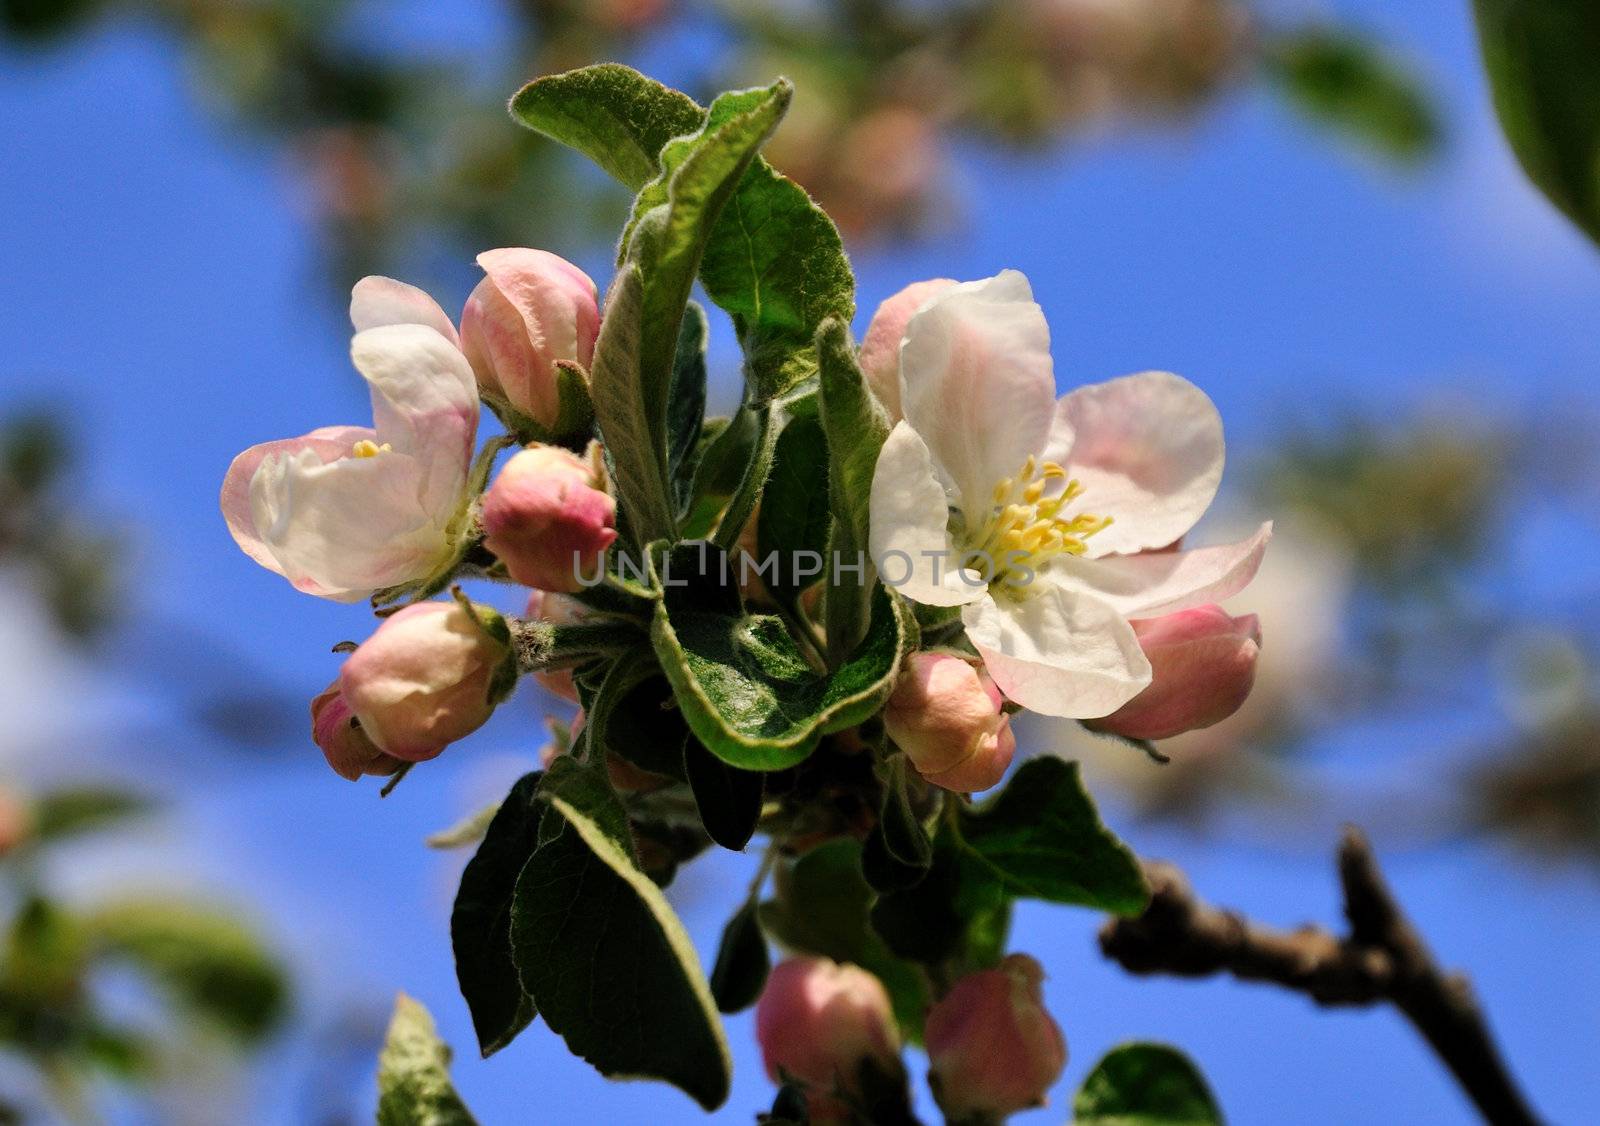 blossom of apple tree by Reana